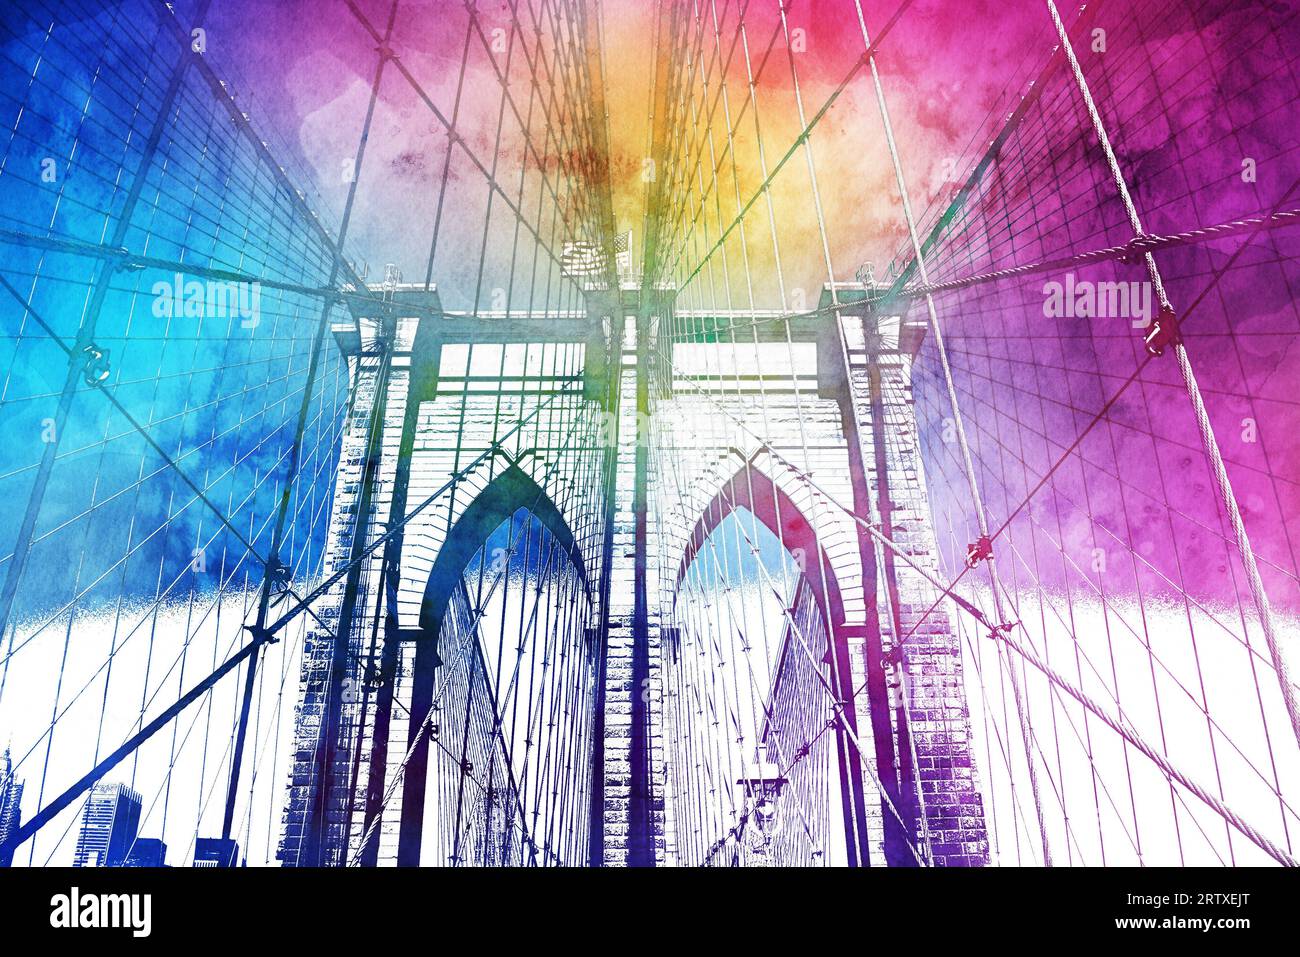 Illustration of the Brooklyn Bridge, New York City. Stock Photo